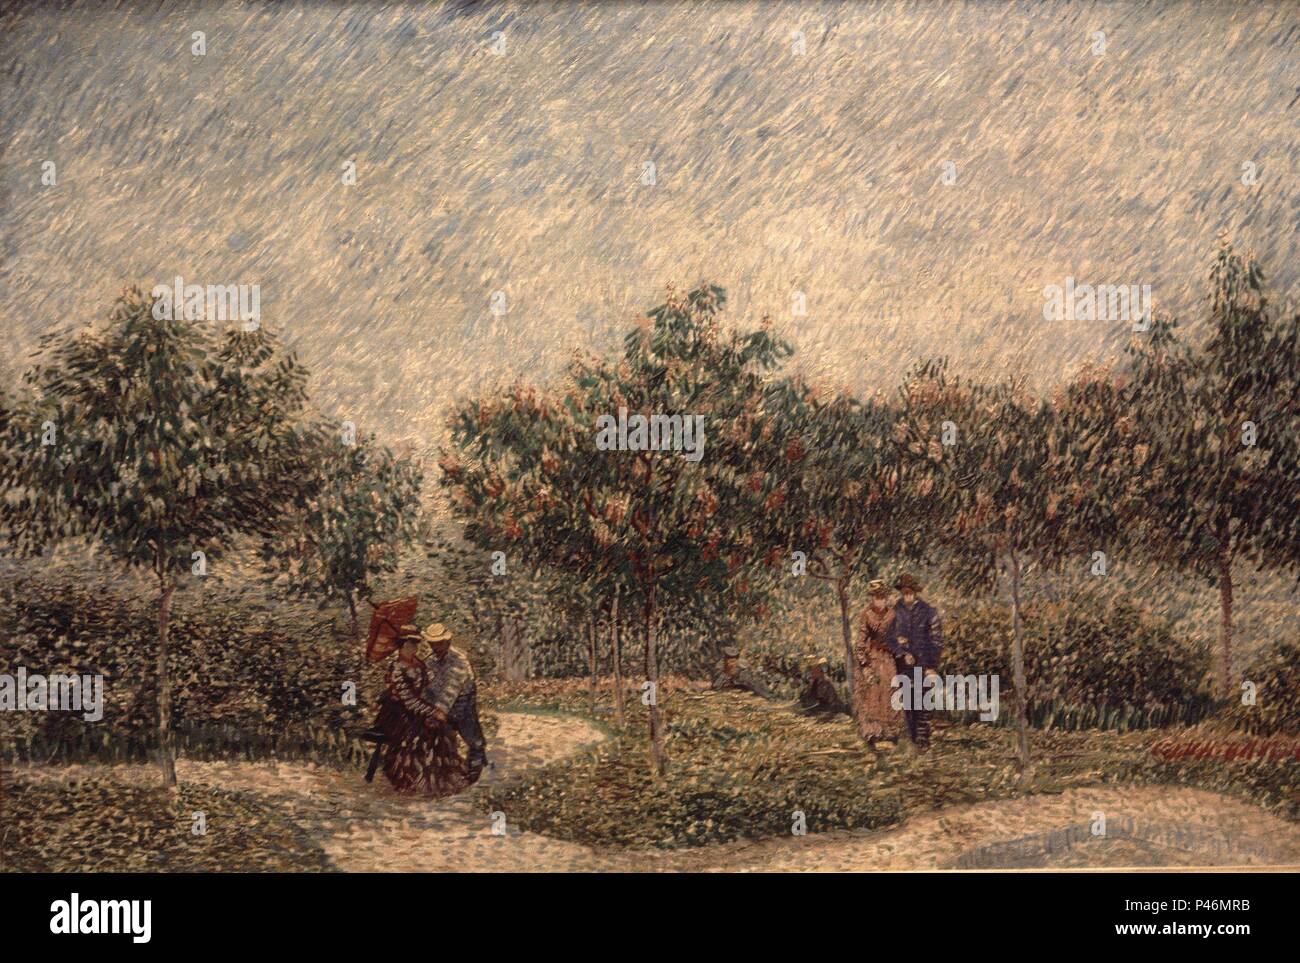 PAREJAS EN ELPARQUE VOYER D'ARGENSON EN ASNIÈRES-JUN/Julio 1887-O/L 75 x 112,5 cm. Autor: Vincent van Gogh (1853-1890). Ort: Van Gogh Museum, Amsterdam, HOLANDA. Stockfoto